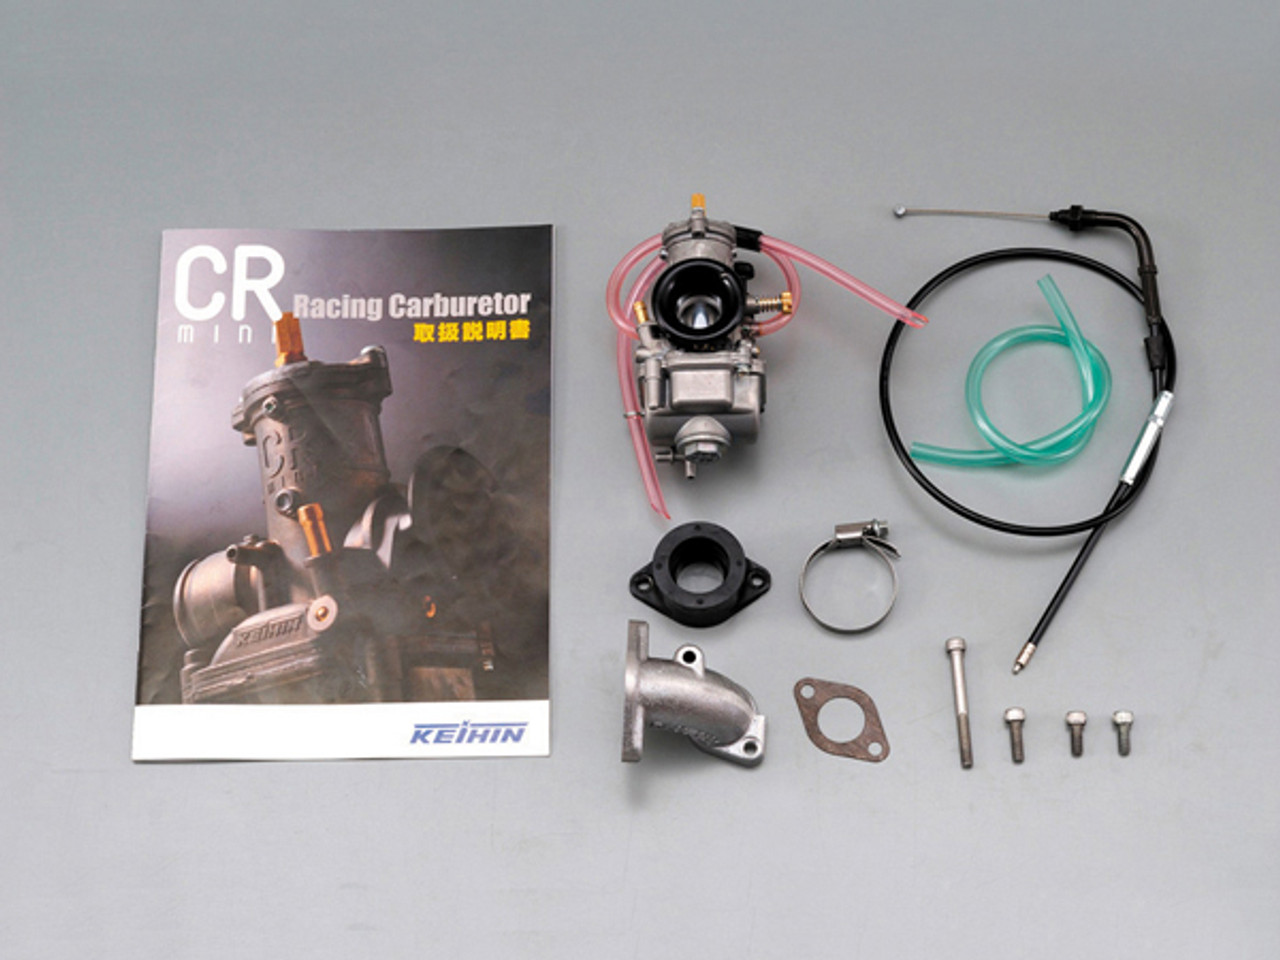 Racing Carb Kit, CR-Mini, Honda Monkey, Gorilla